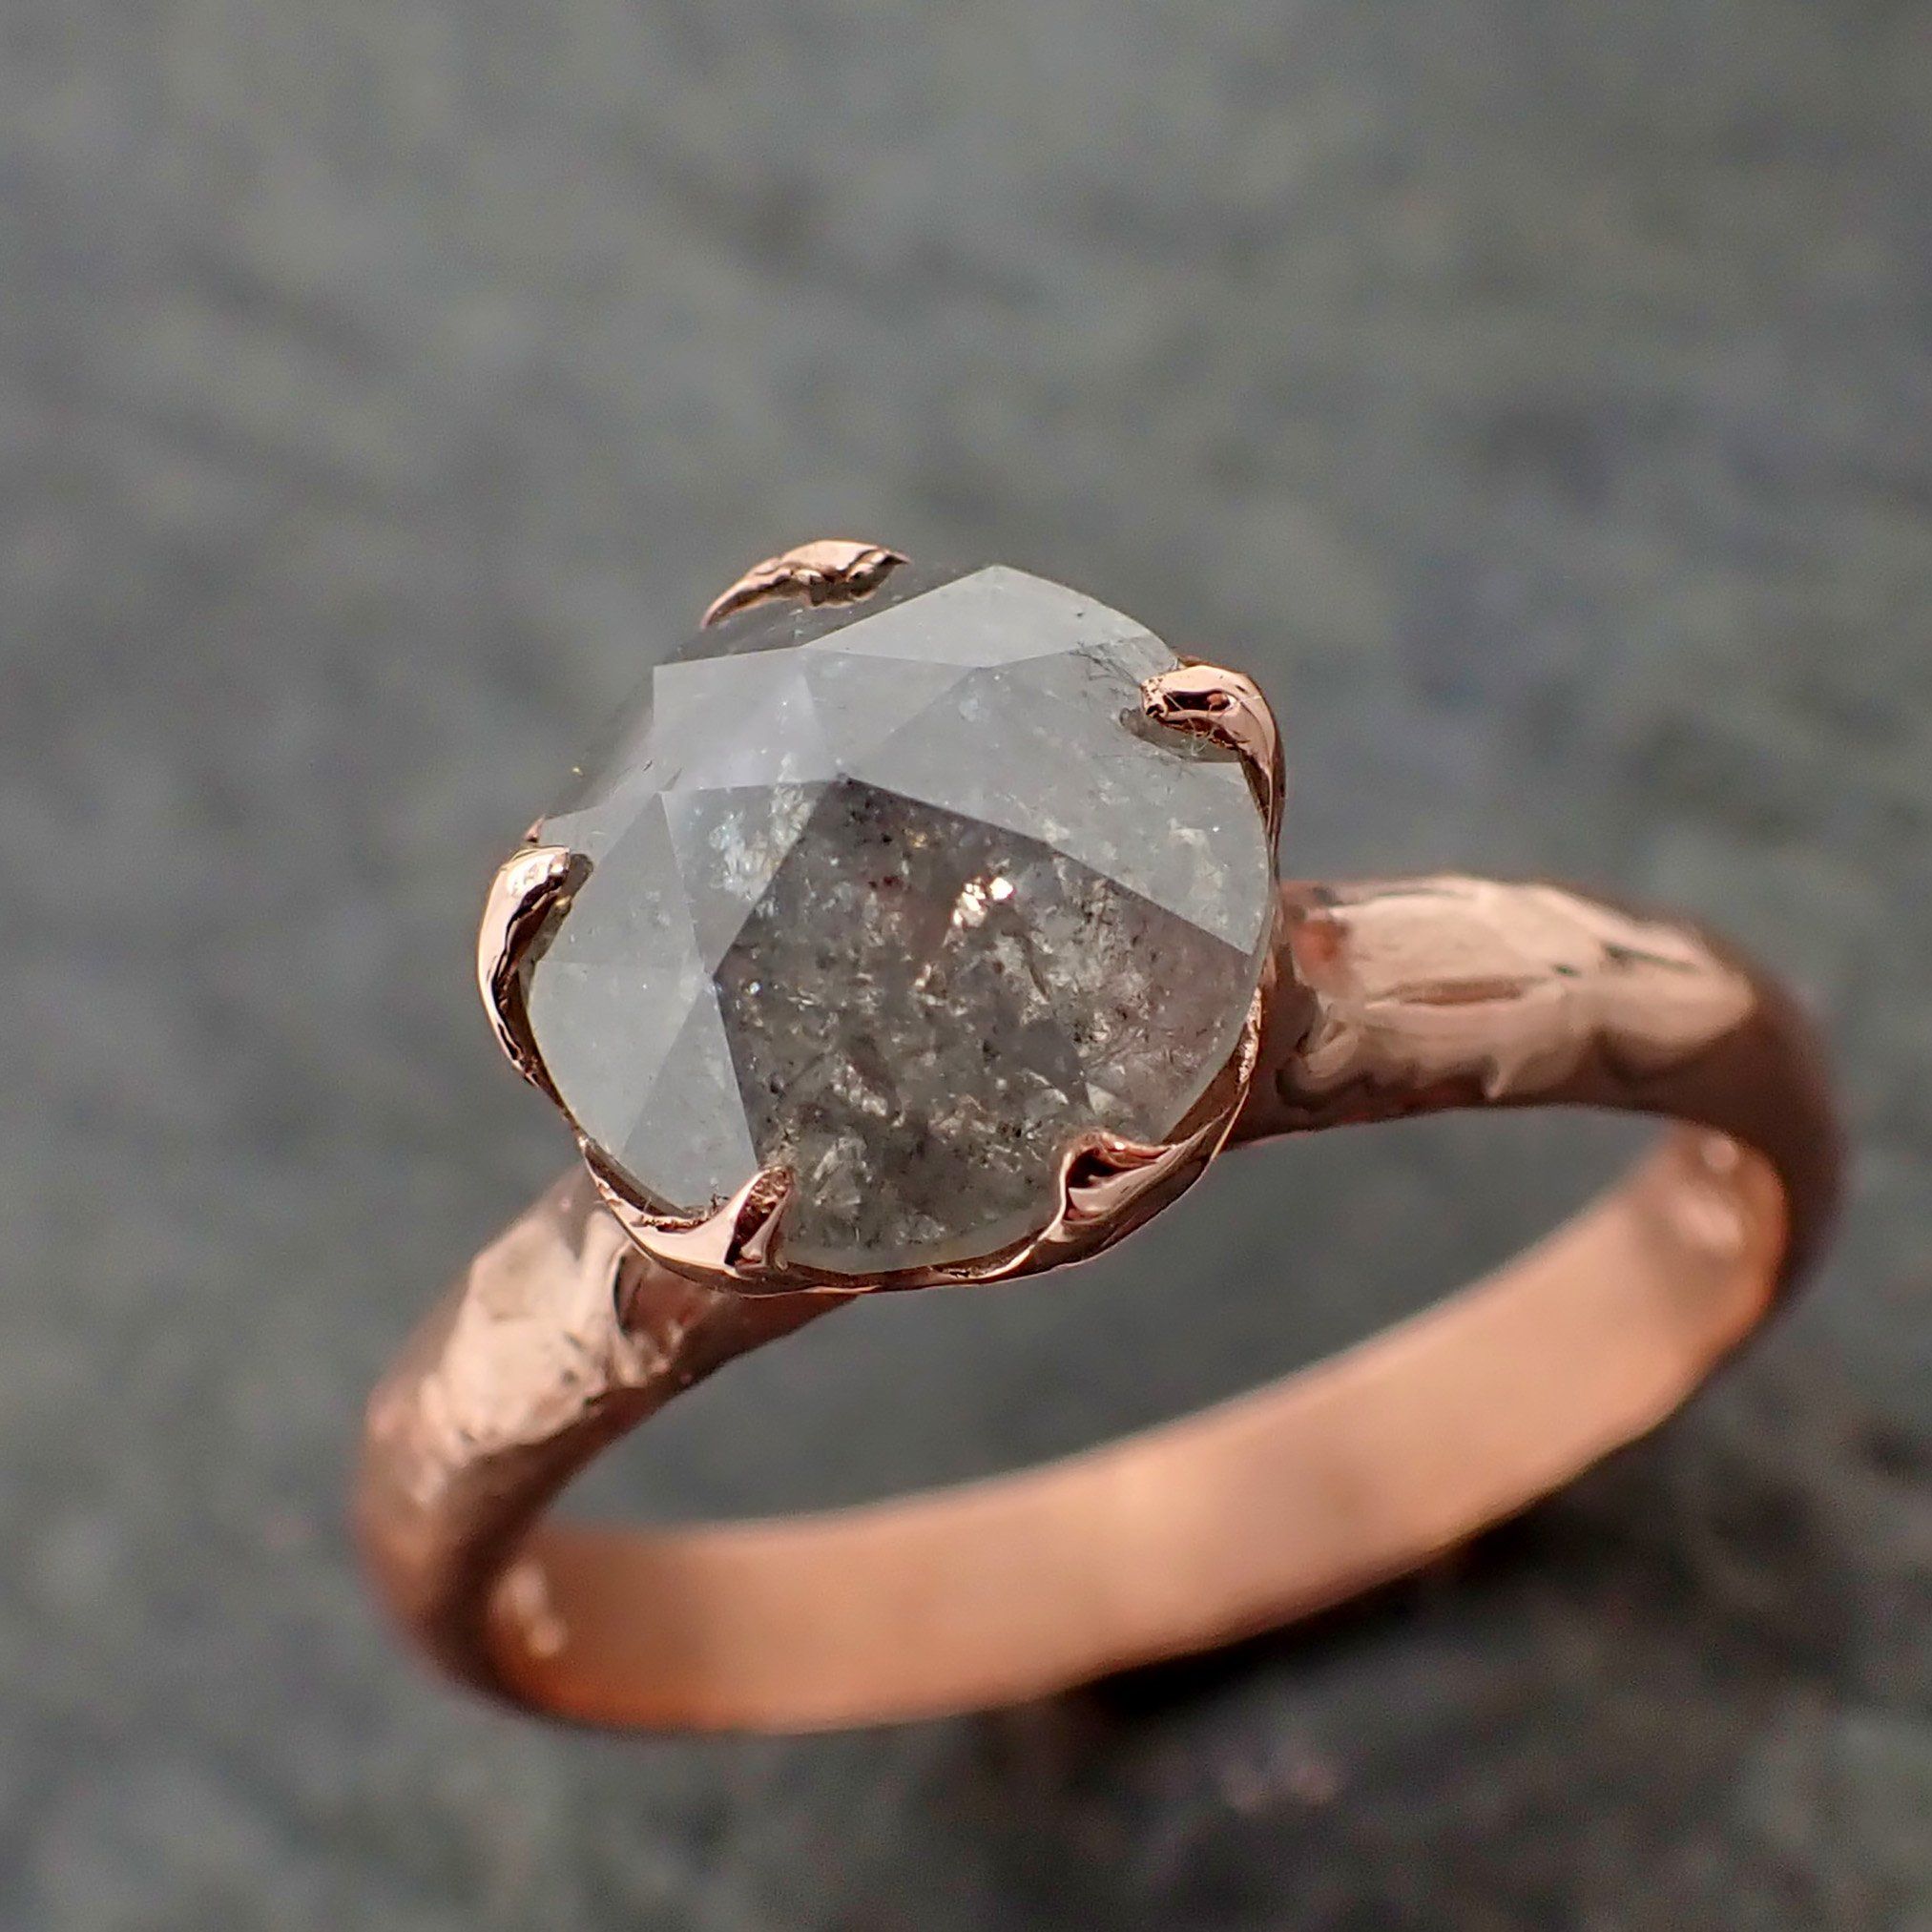 fancy cut white diamond engagement 14k rose gold solitaire stone wedding ring stacking byangeline 2177 Alternative Engagement